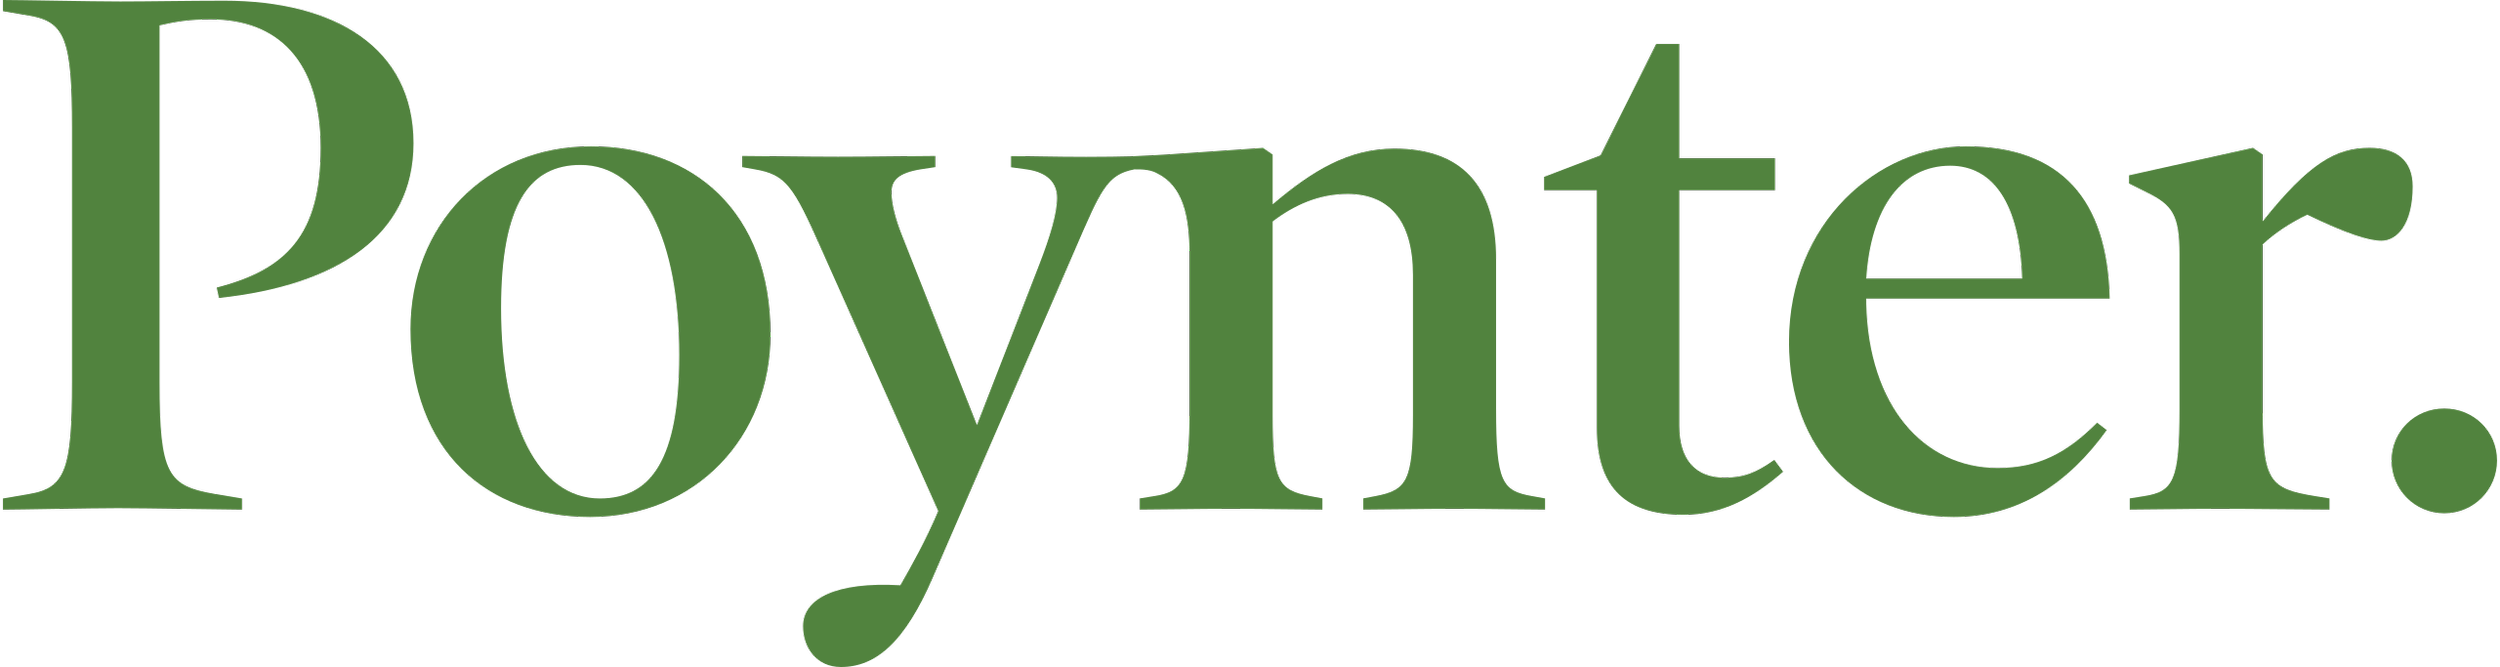 Poynter Logo 1.png